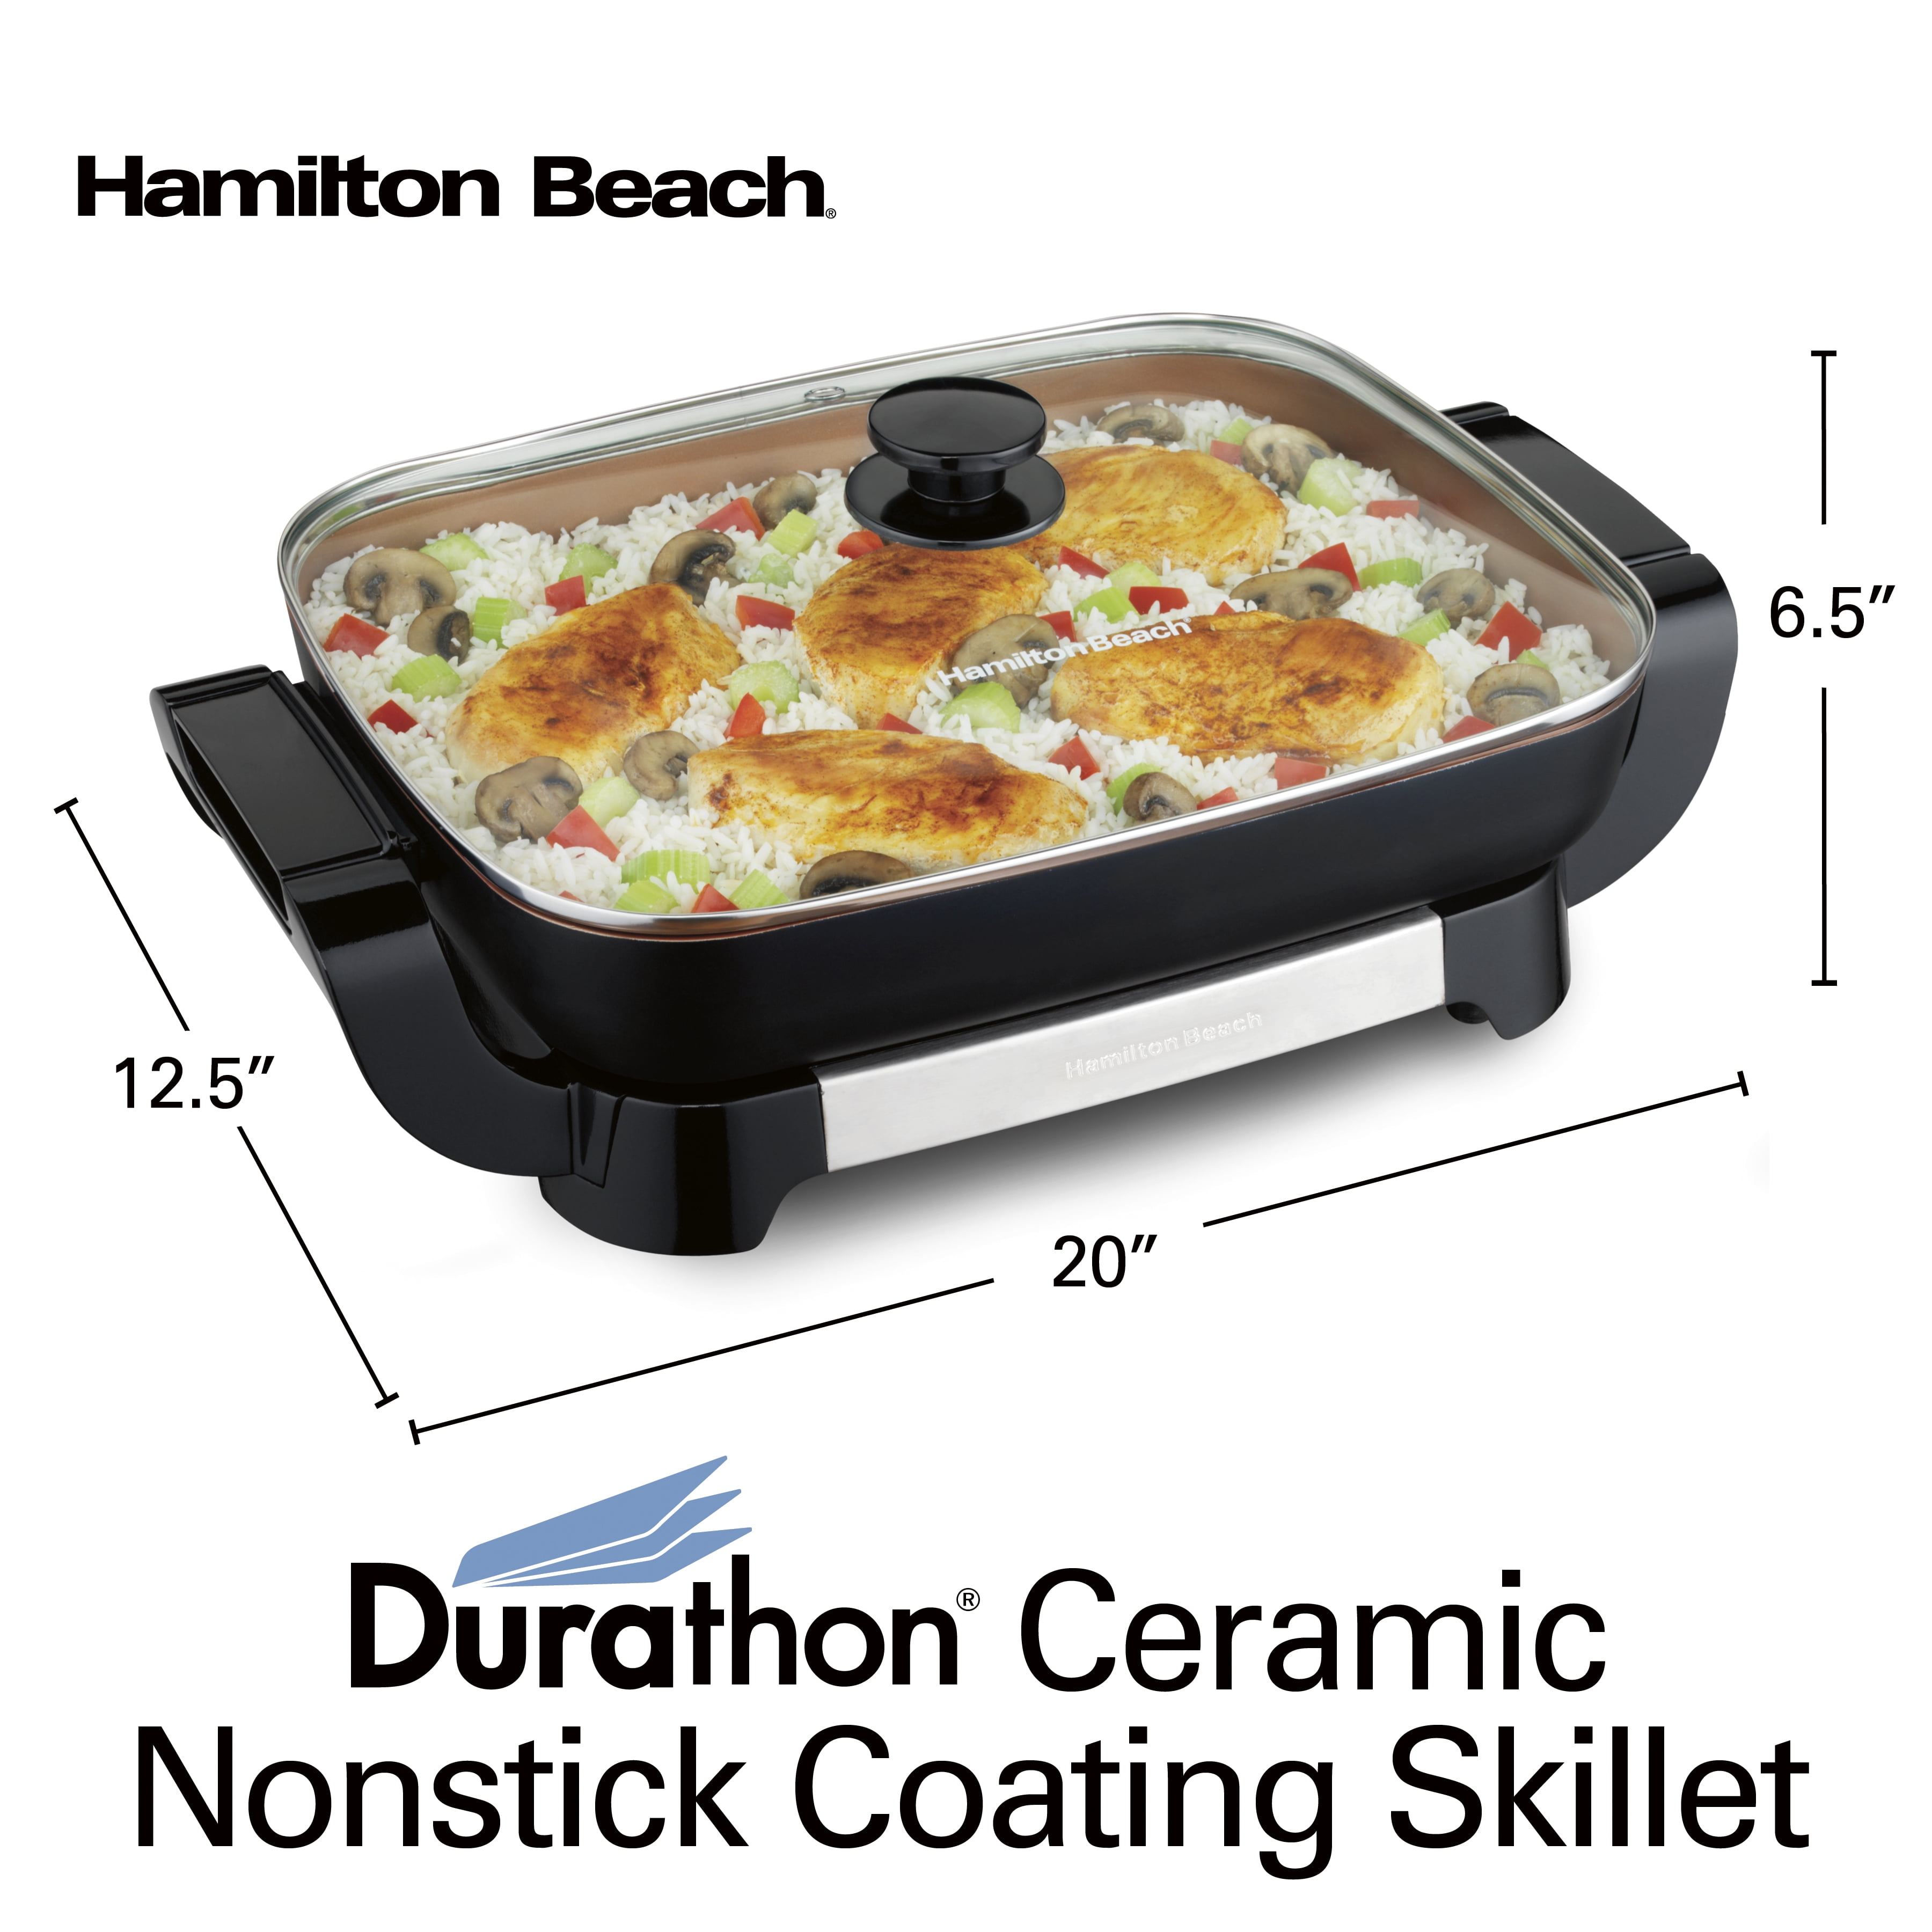 Hamilton Beach Durathon Ceramic Electric Skillet with Removable 12x15” Pan,  Adjustable Temperature, Reversible Design, Tempered Glass Lid (38529K)